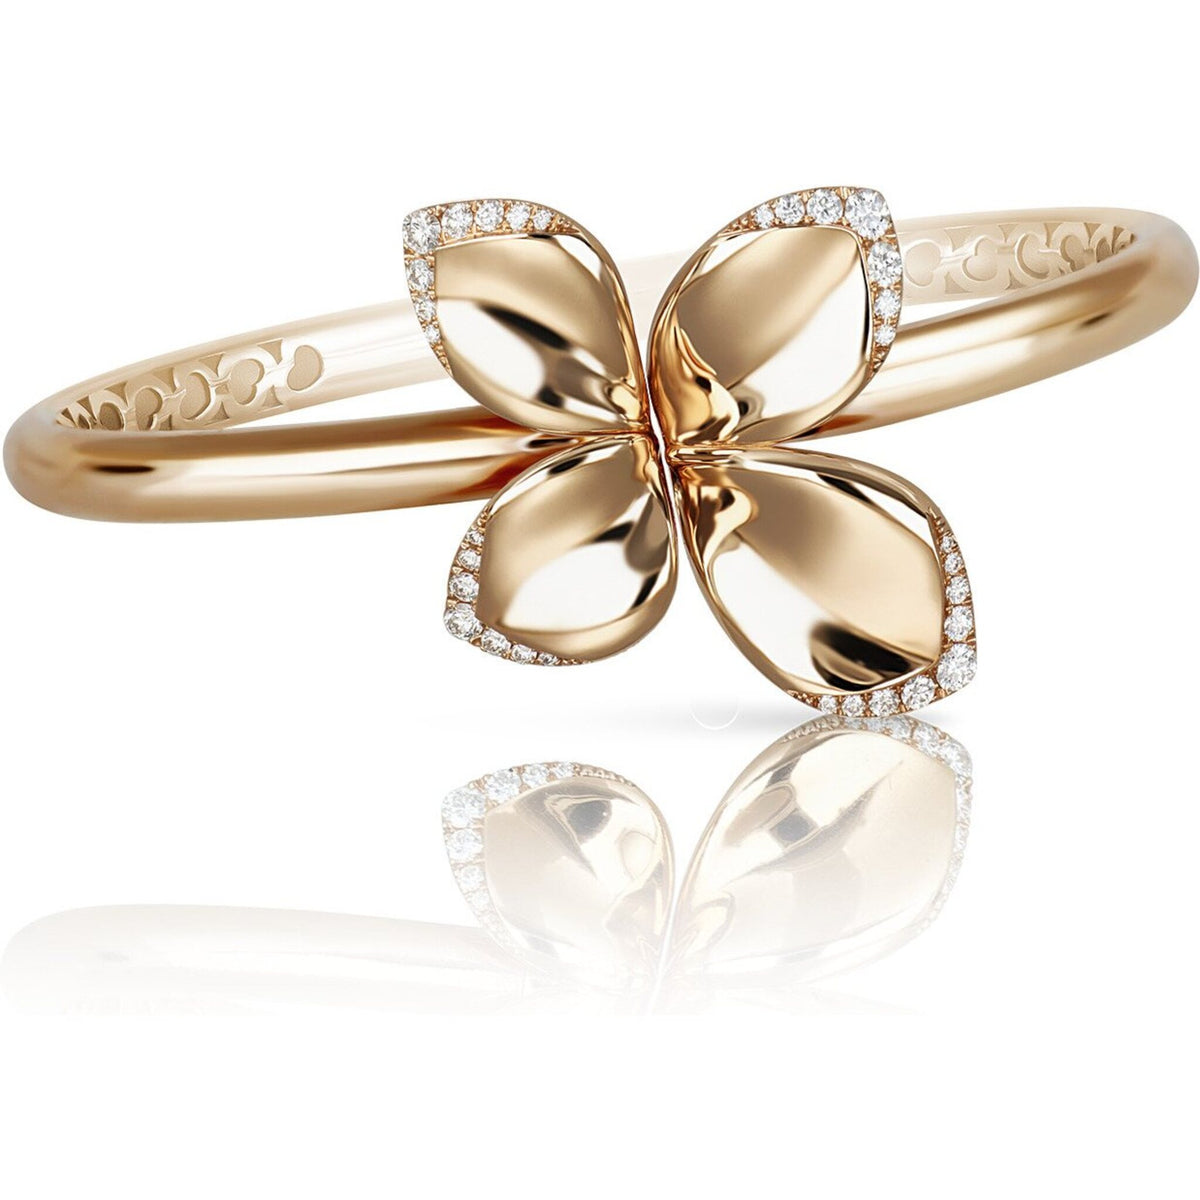 Pasquale Bruni - Giardini Segreti Medium Flower Bracelet in 18k Rose Gold with White Diamonds